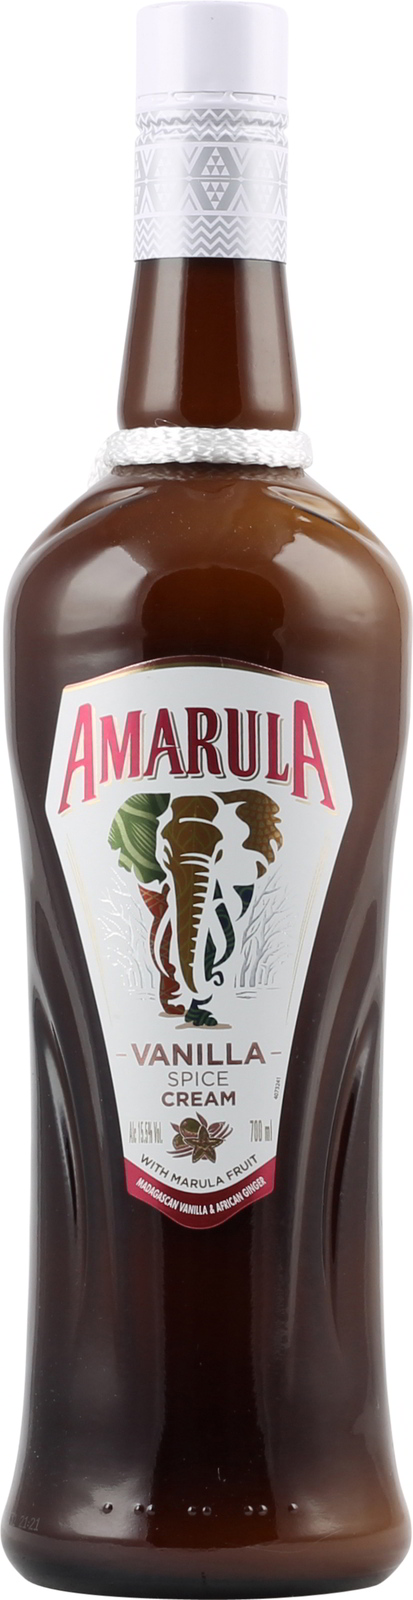 Spice l 15,5 Vanilla % qualitativ Vol. hoch 0,7 Amarula